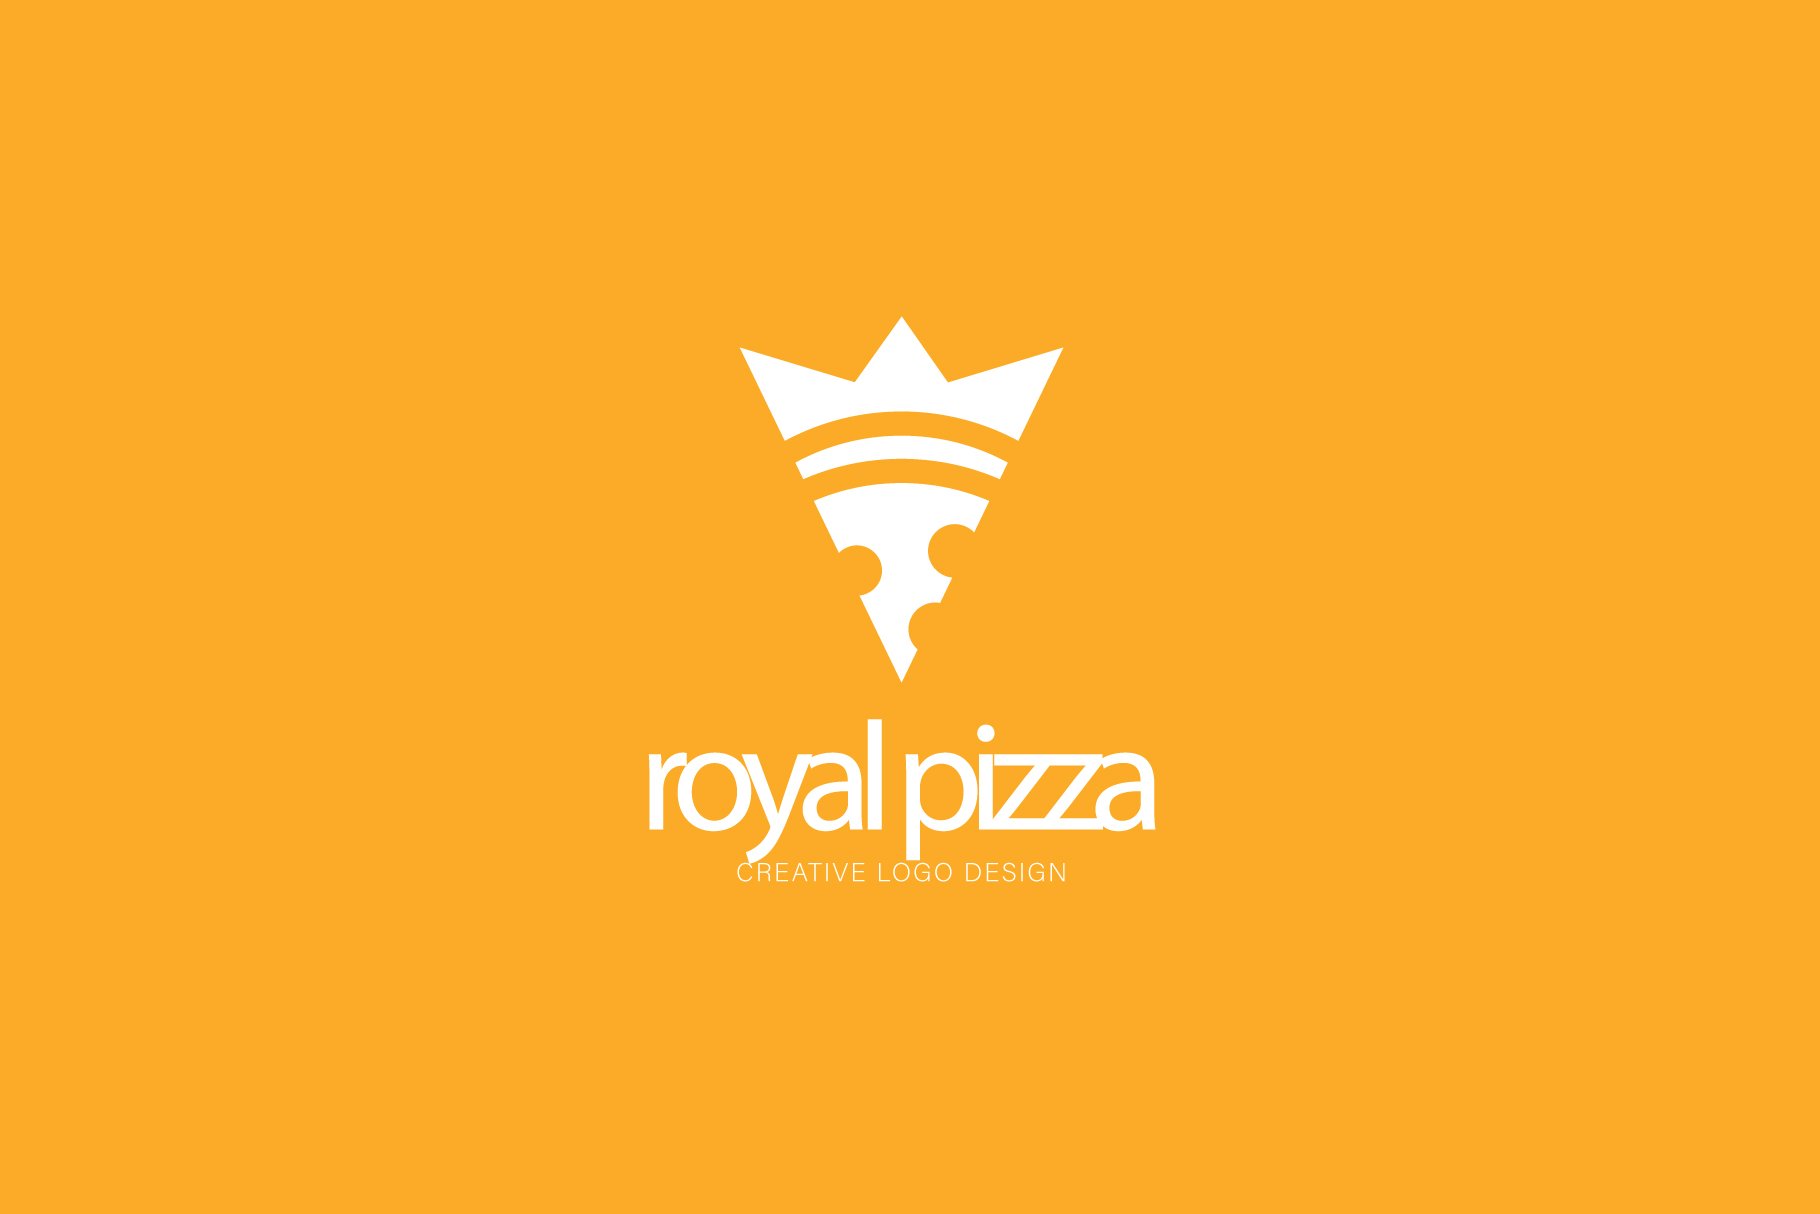 royal pizza logo cover image.